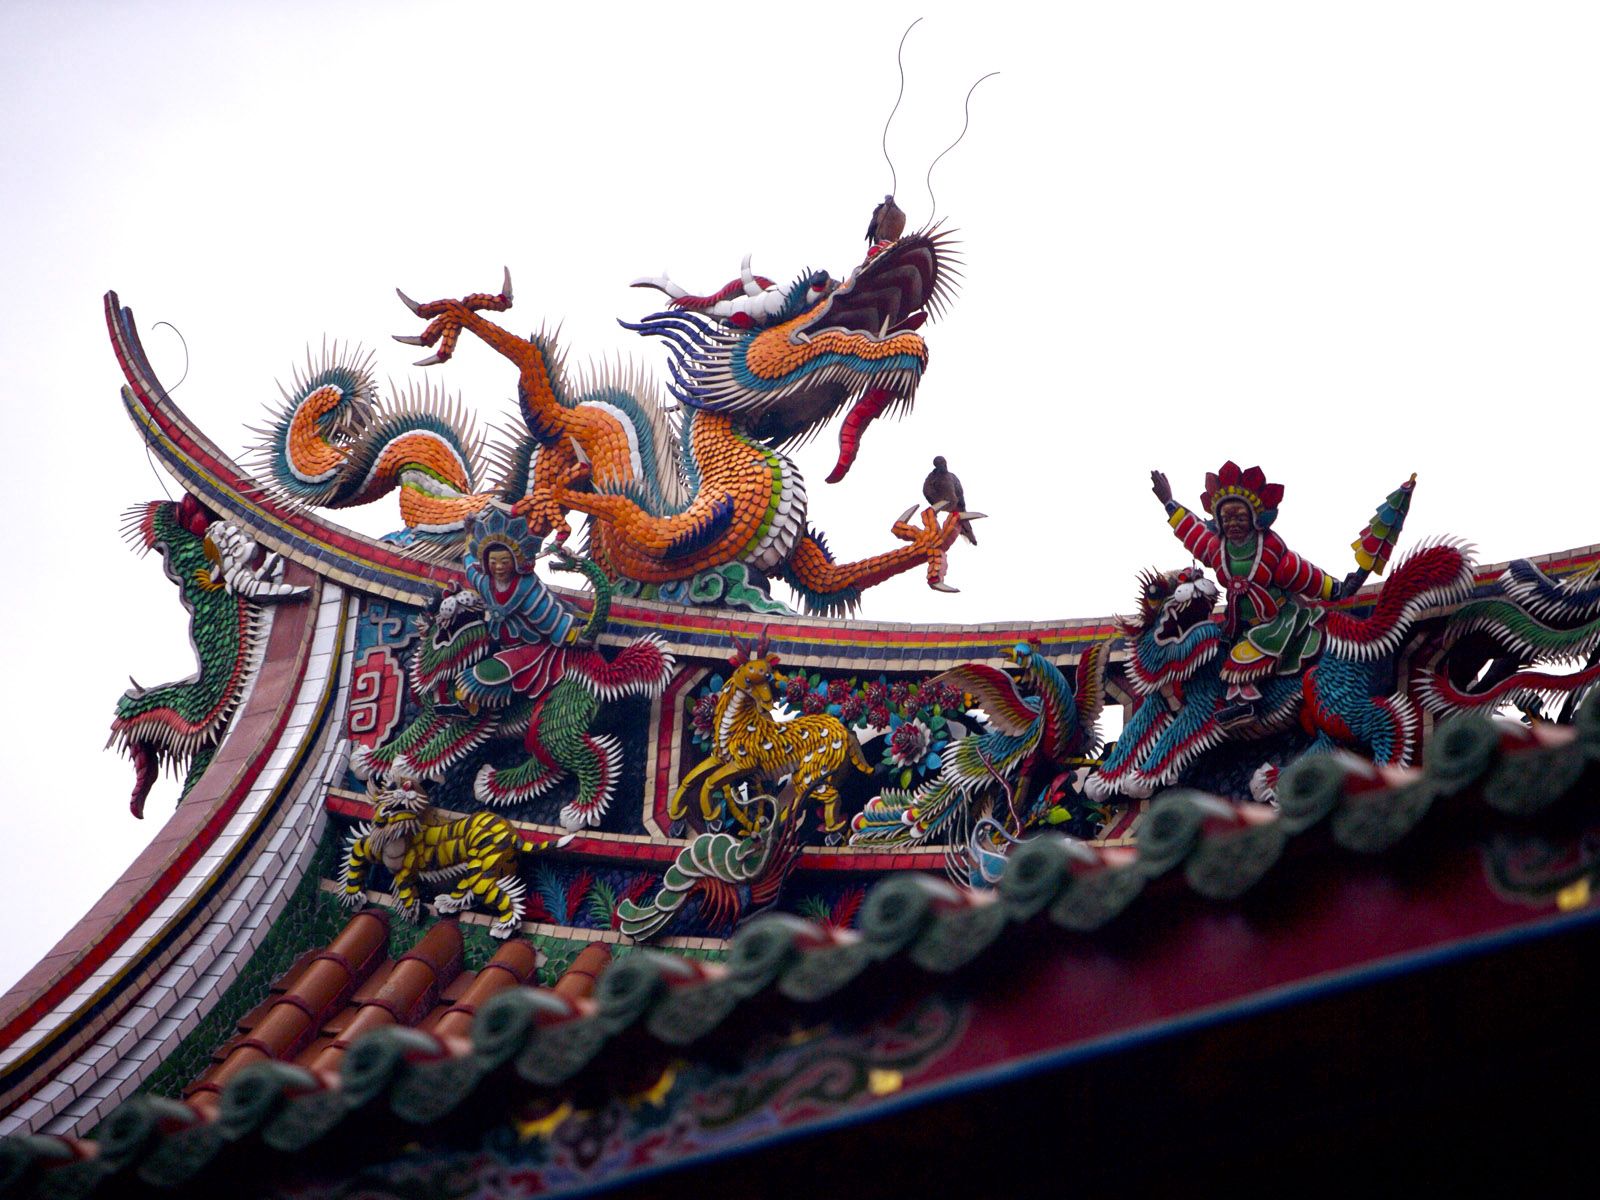 china, miscellanea, miscellaneous, dragon, roof, decoration